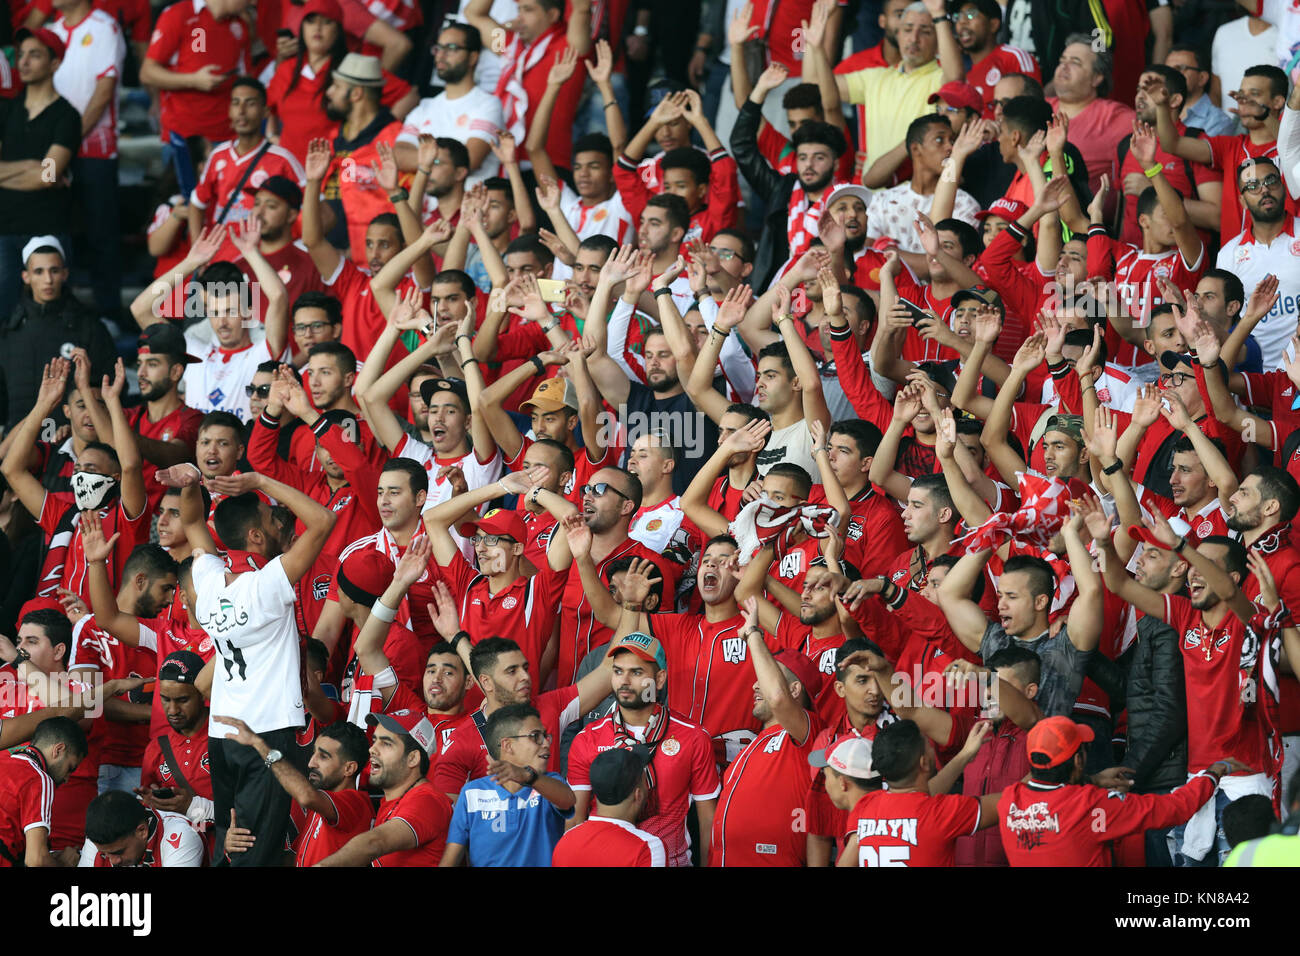 Les Supporters De Football Applaudissent Avec Des Confettis En